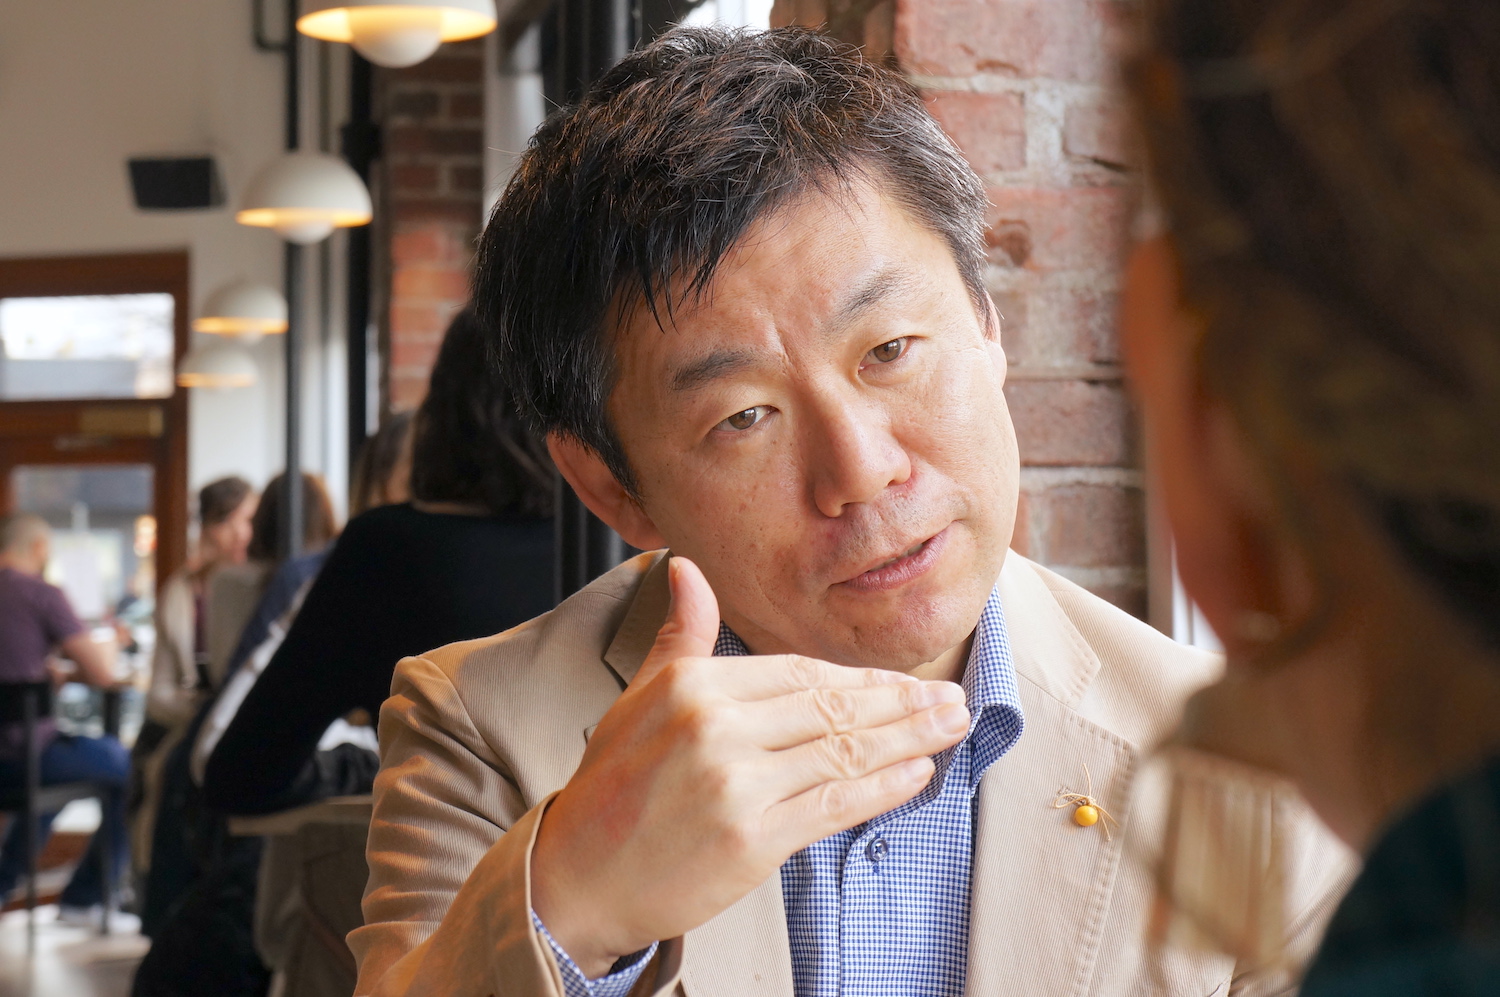 Kiyukai Interviewer Mika Shimomura